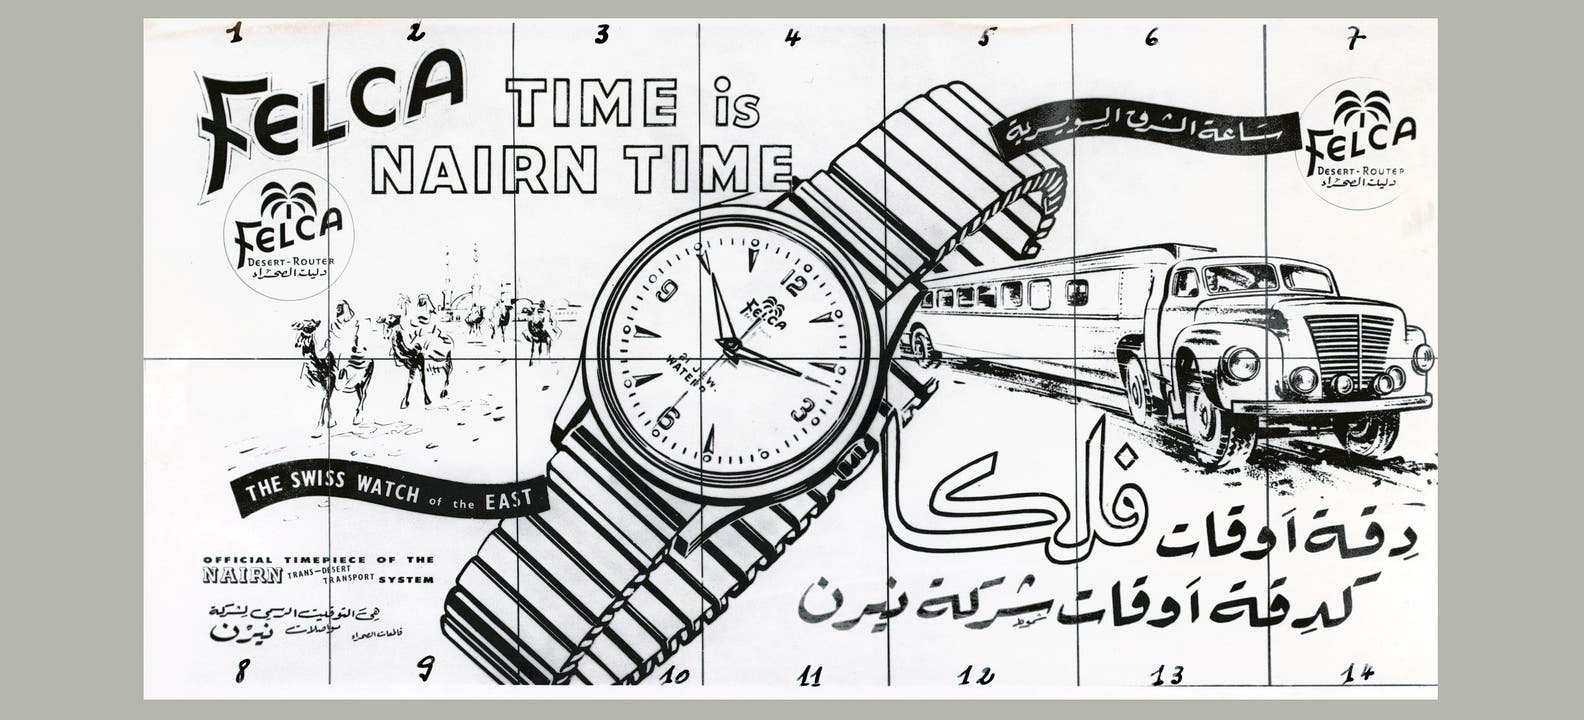 1957: Felca - the Swiss Watch of the East